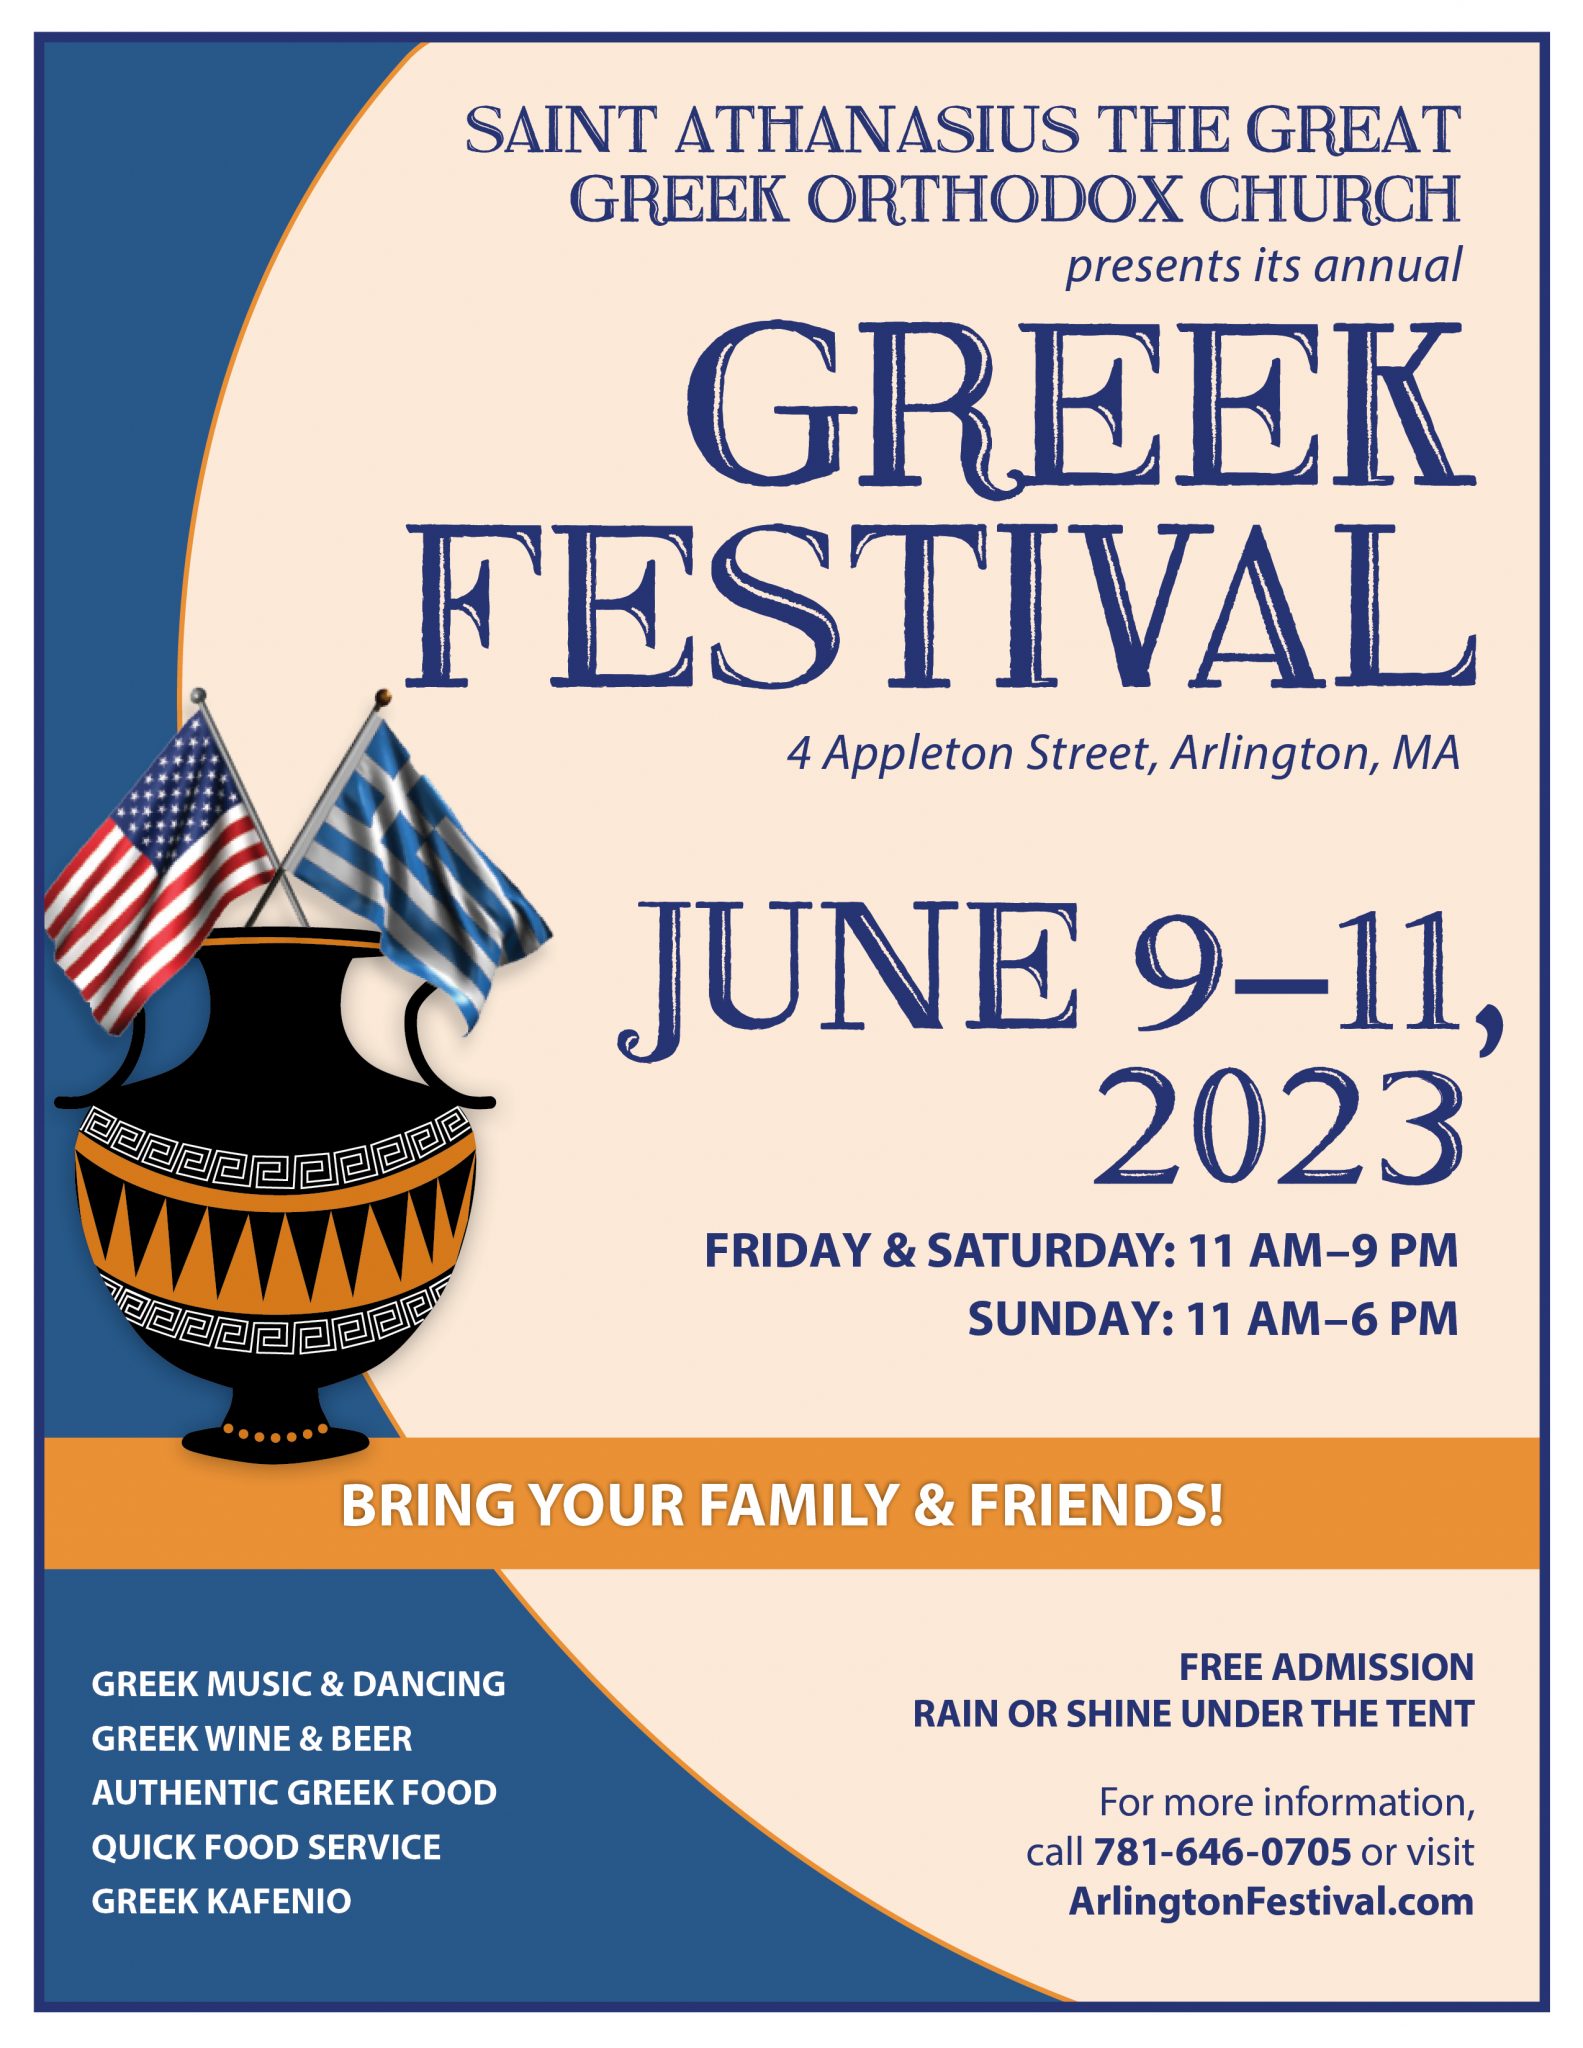 Arlington MA Greek Festival at Saint Athanasius Greek Orthodox Church